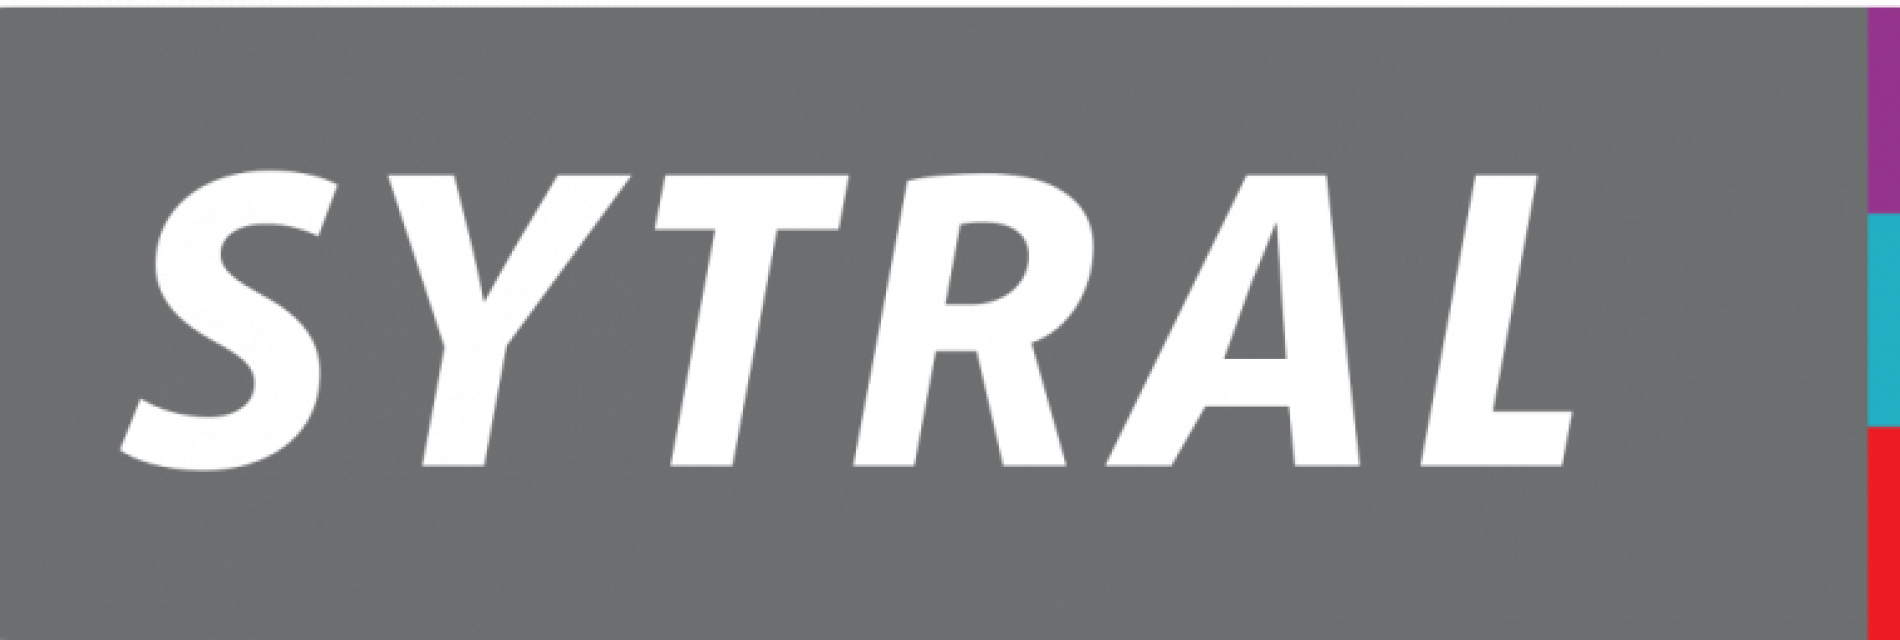 Sytral-logo-2015.svg